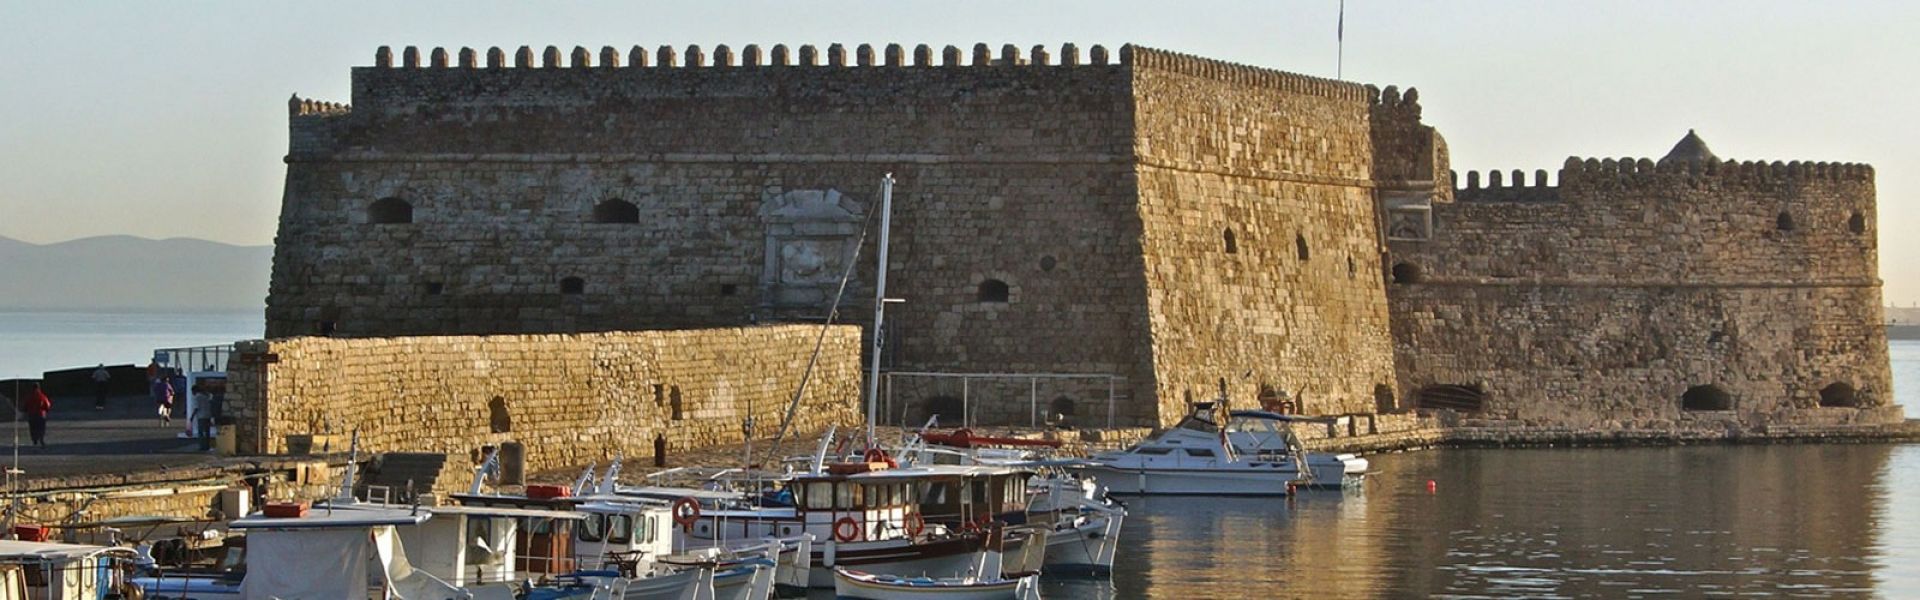 Venetian Fortress - Heraklion city